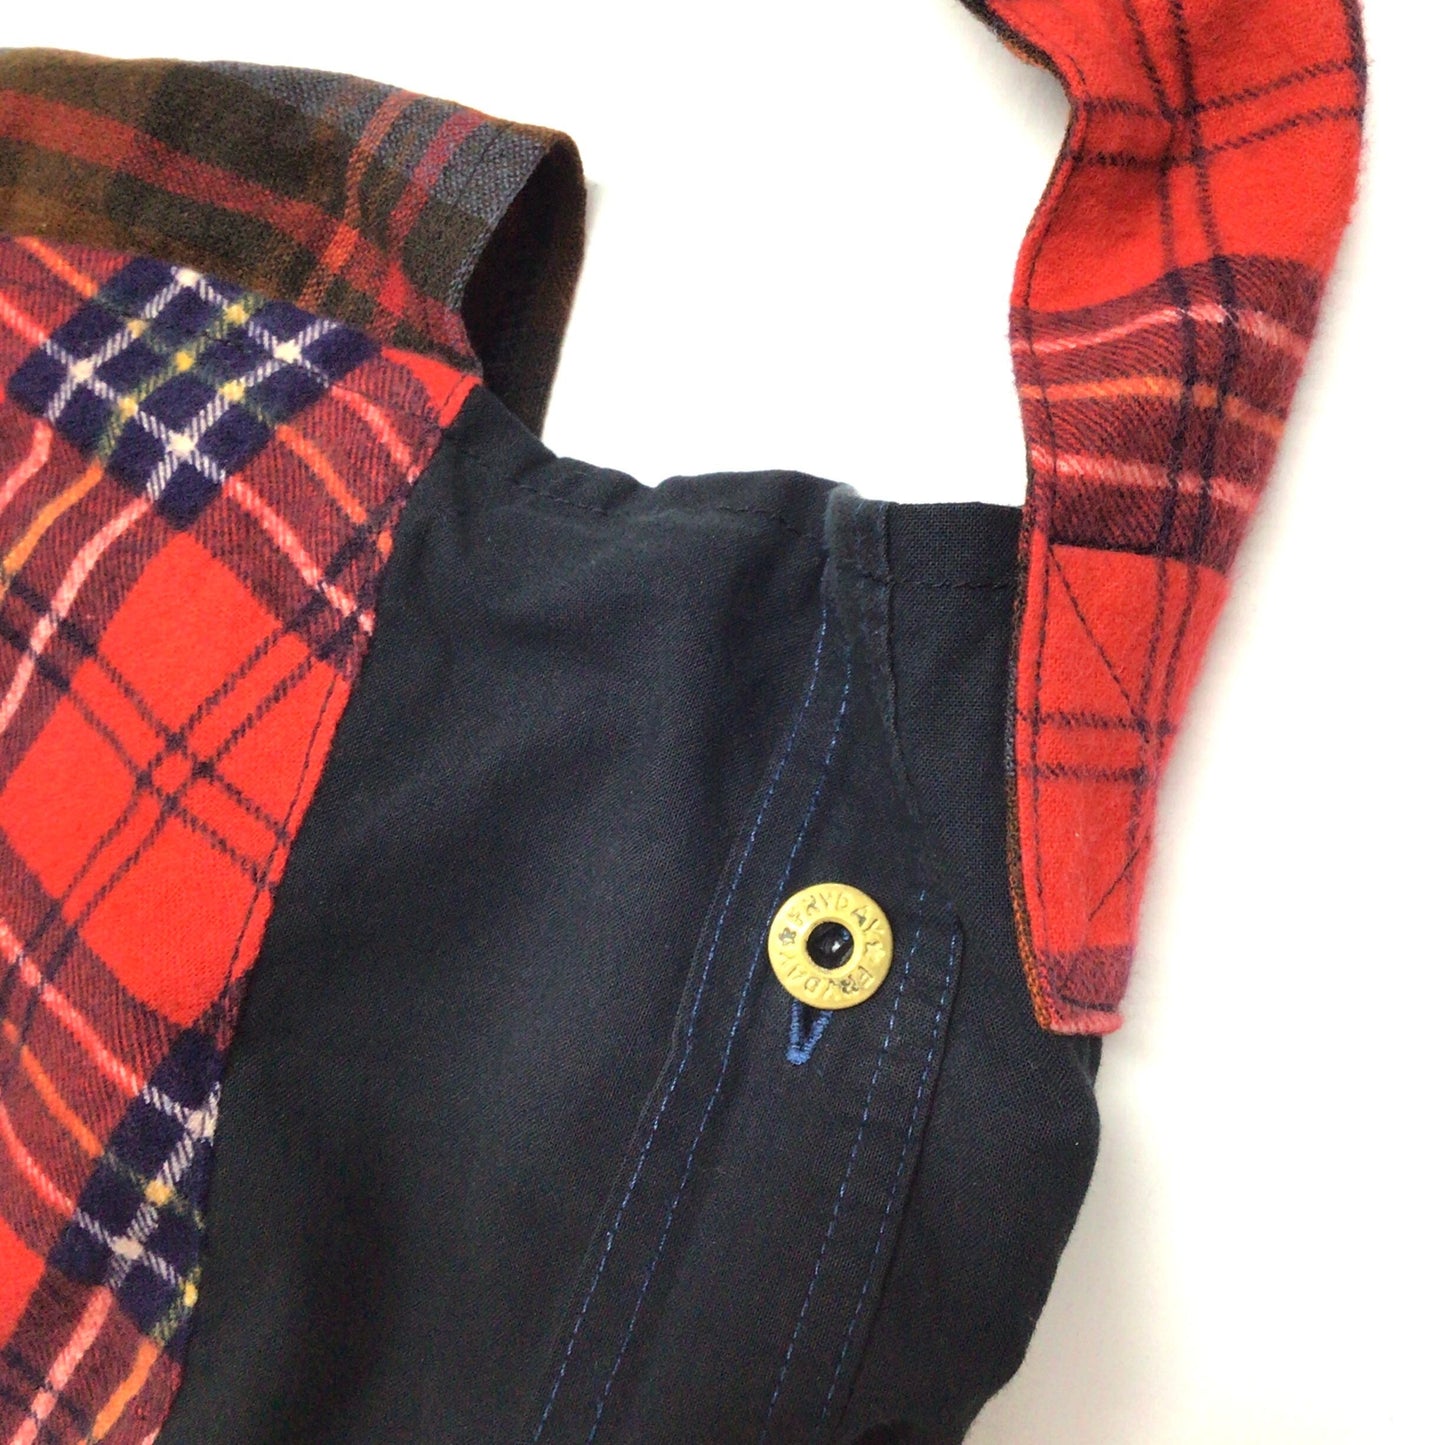 Amekaji Japanese Vintage Handmade Custom One and Only One Cote Mer Upcycle Sustainable Upscale Street Fashion Embroidered Remake Military Shirts Bag